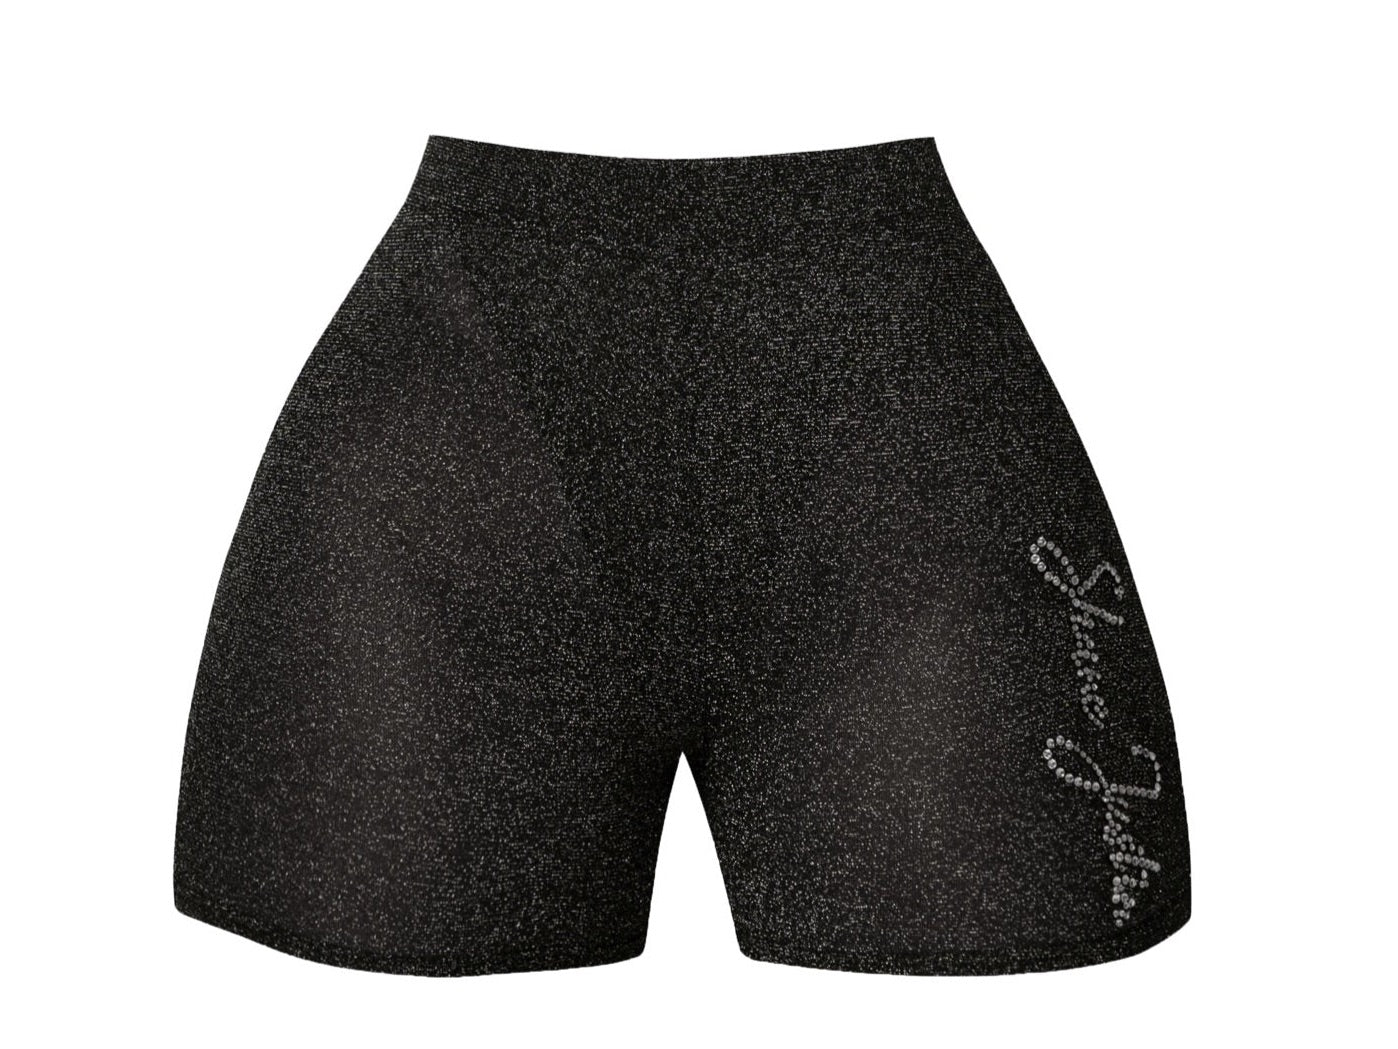 Signature Spark Black Shorts